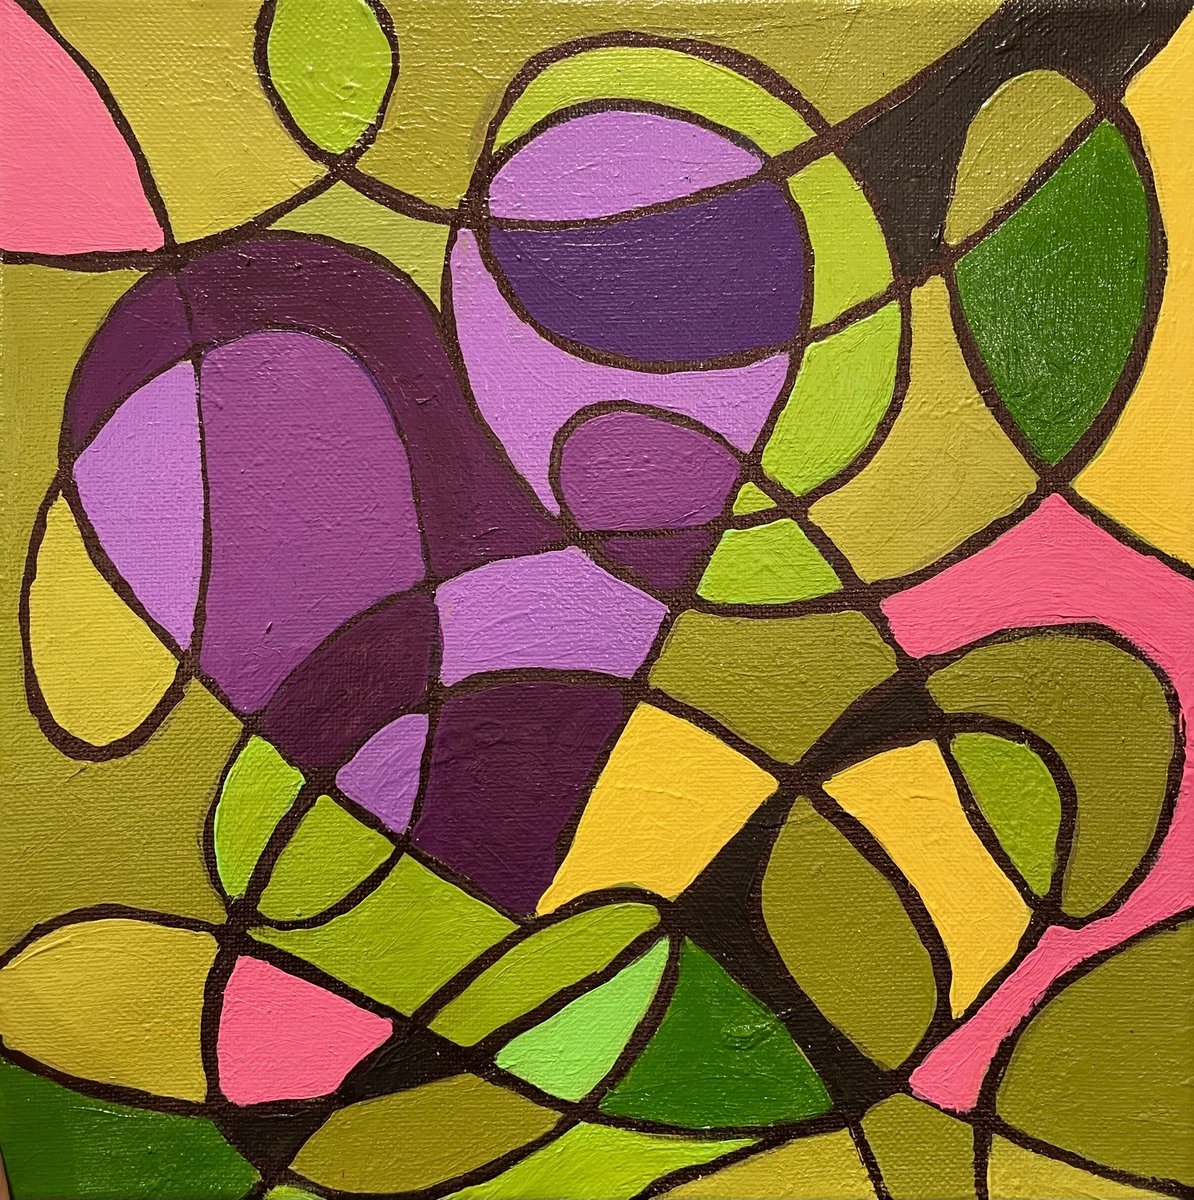 💕❤️Acrylics on canvas. Tree panels. 10x10”. #art #abstractart #artistzone #artwork #abstractartist #abstracts #painting #acrylicpainting #originalart #newart #loveart #visualart #visualarts #visualartists #heart #hearts.